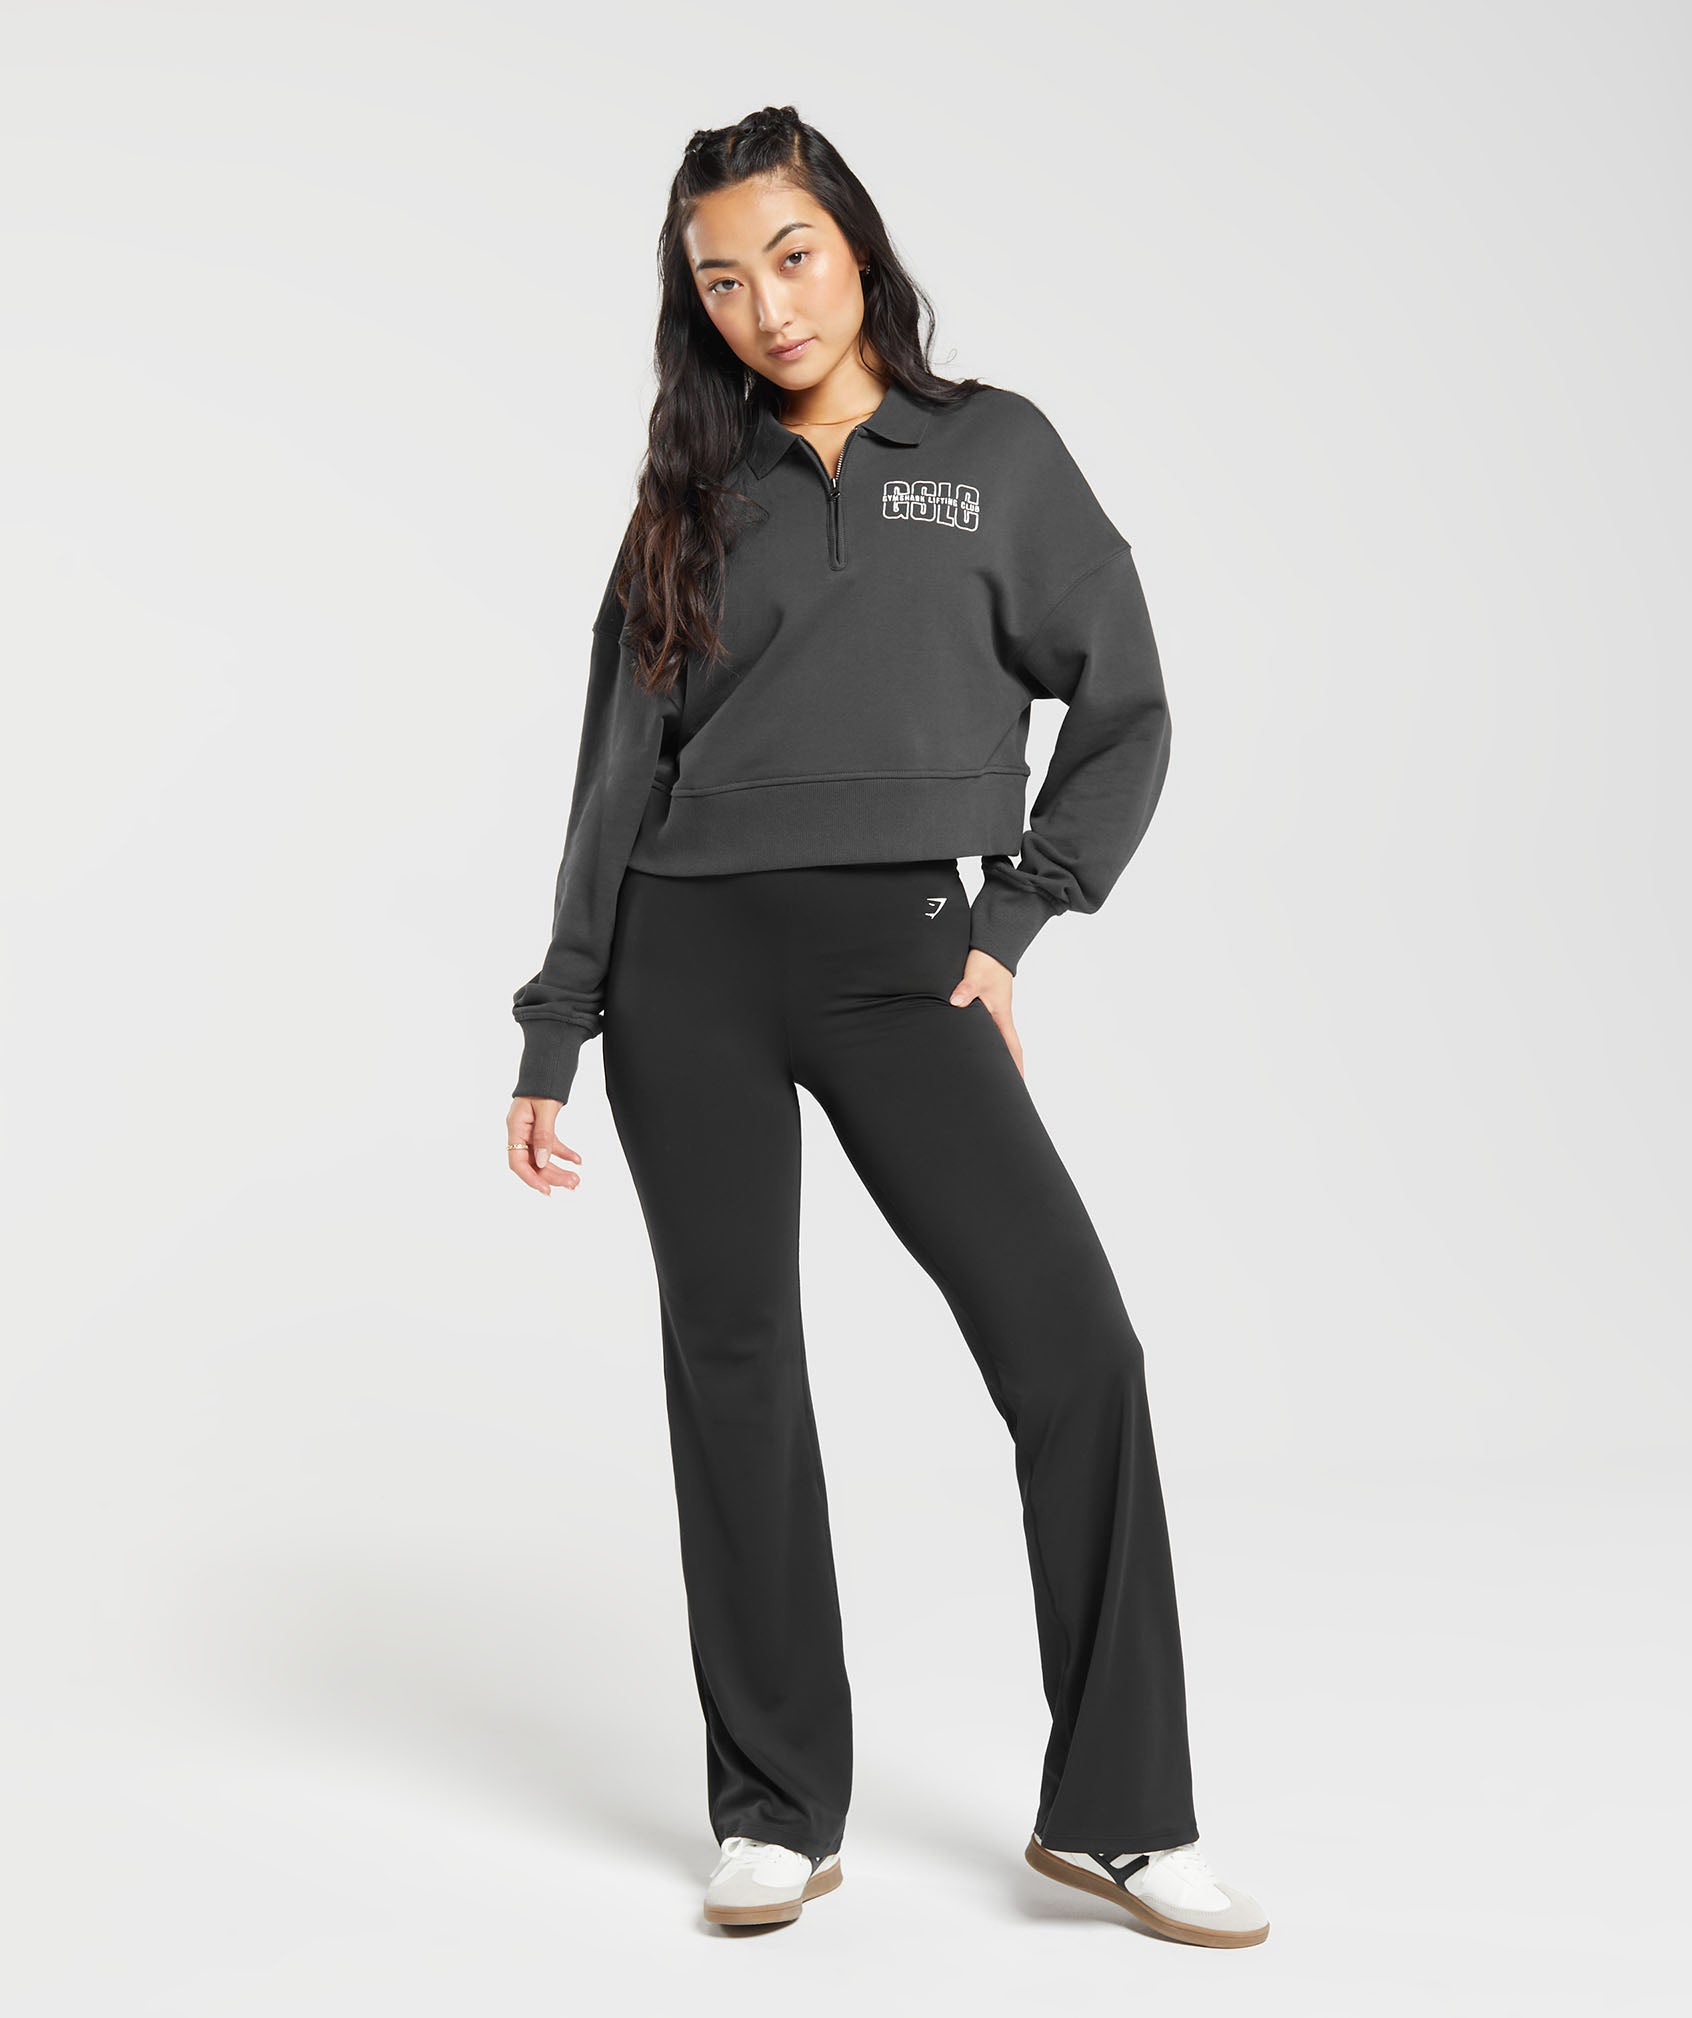 Outline Graphic Oversized 1/4 Zip Pullover in Asphalt Grey - view 4